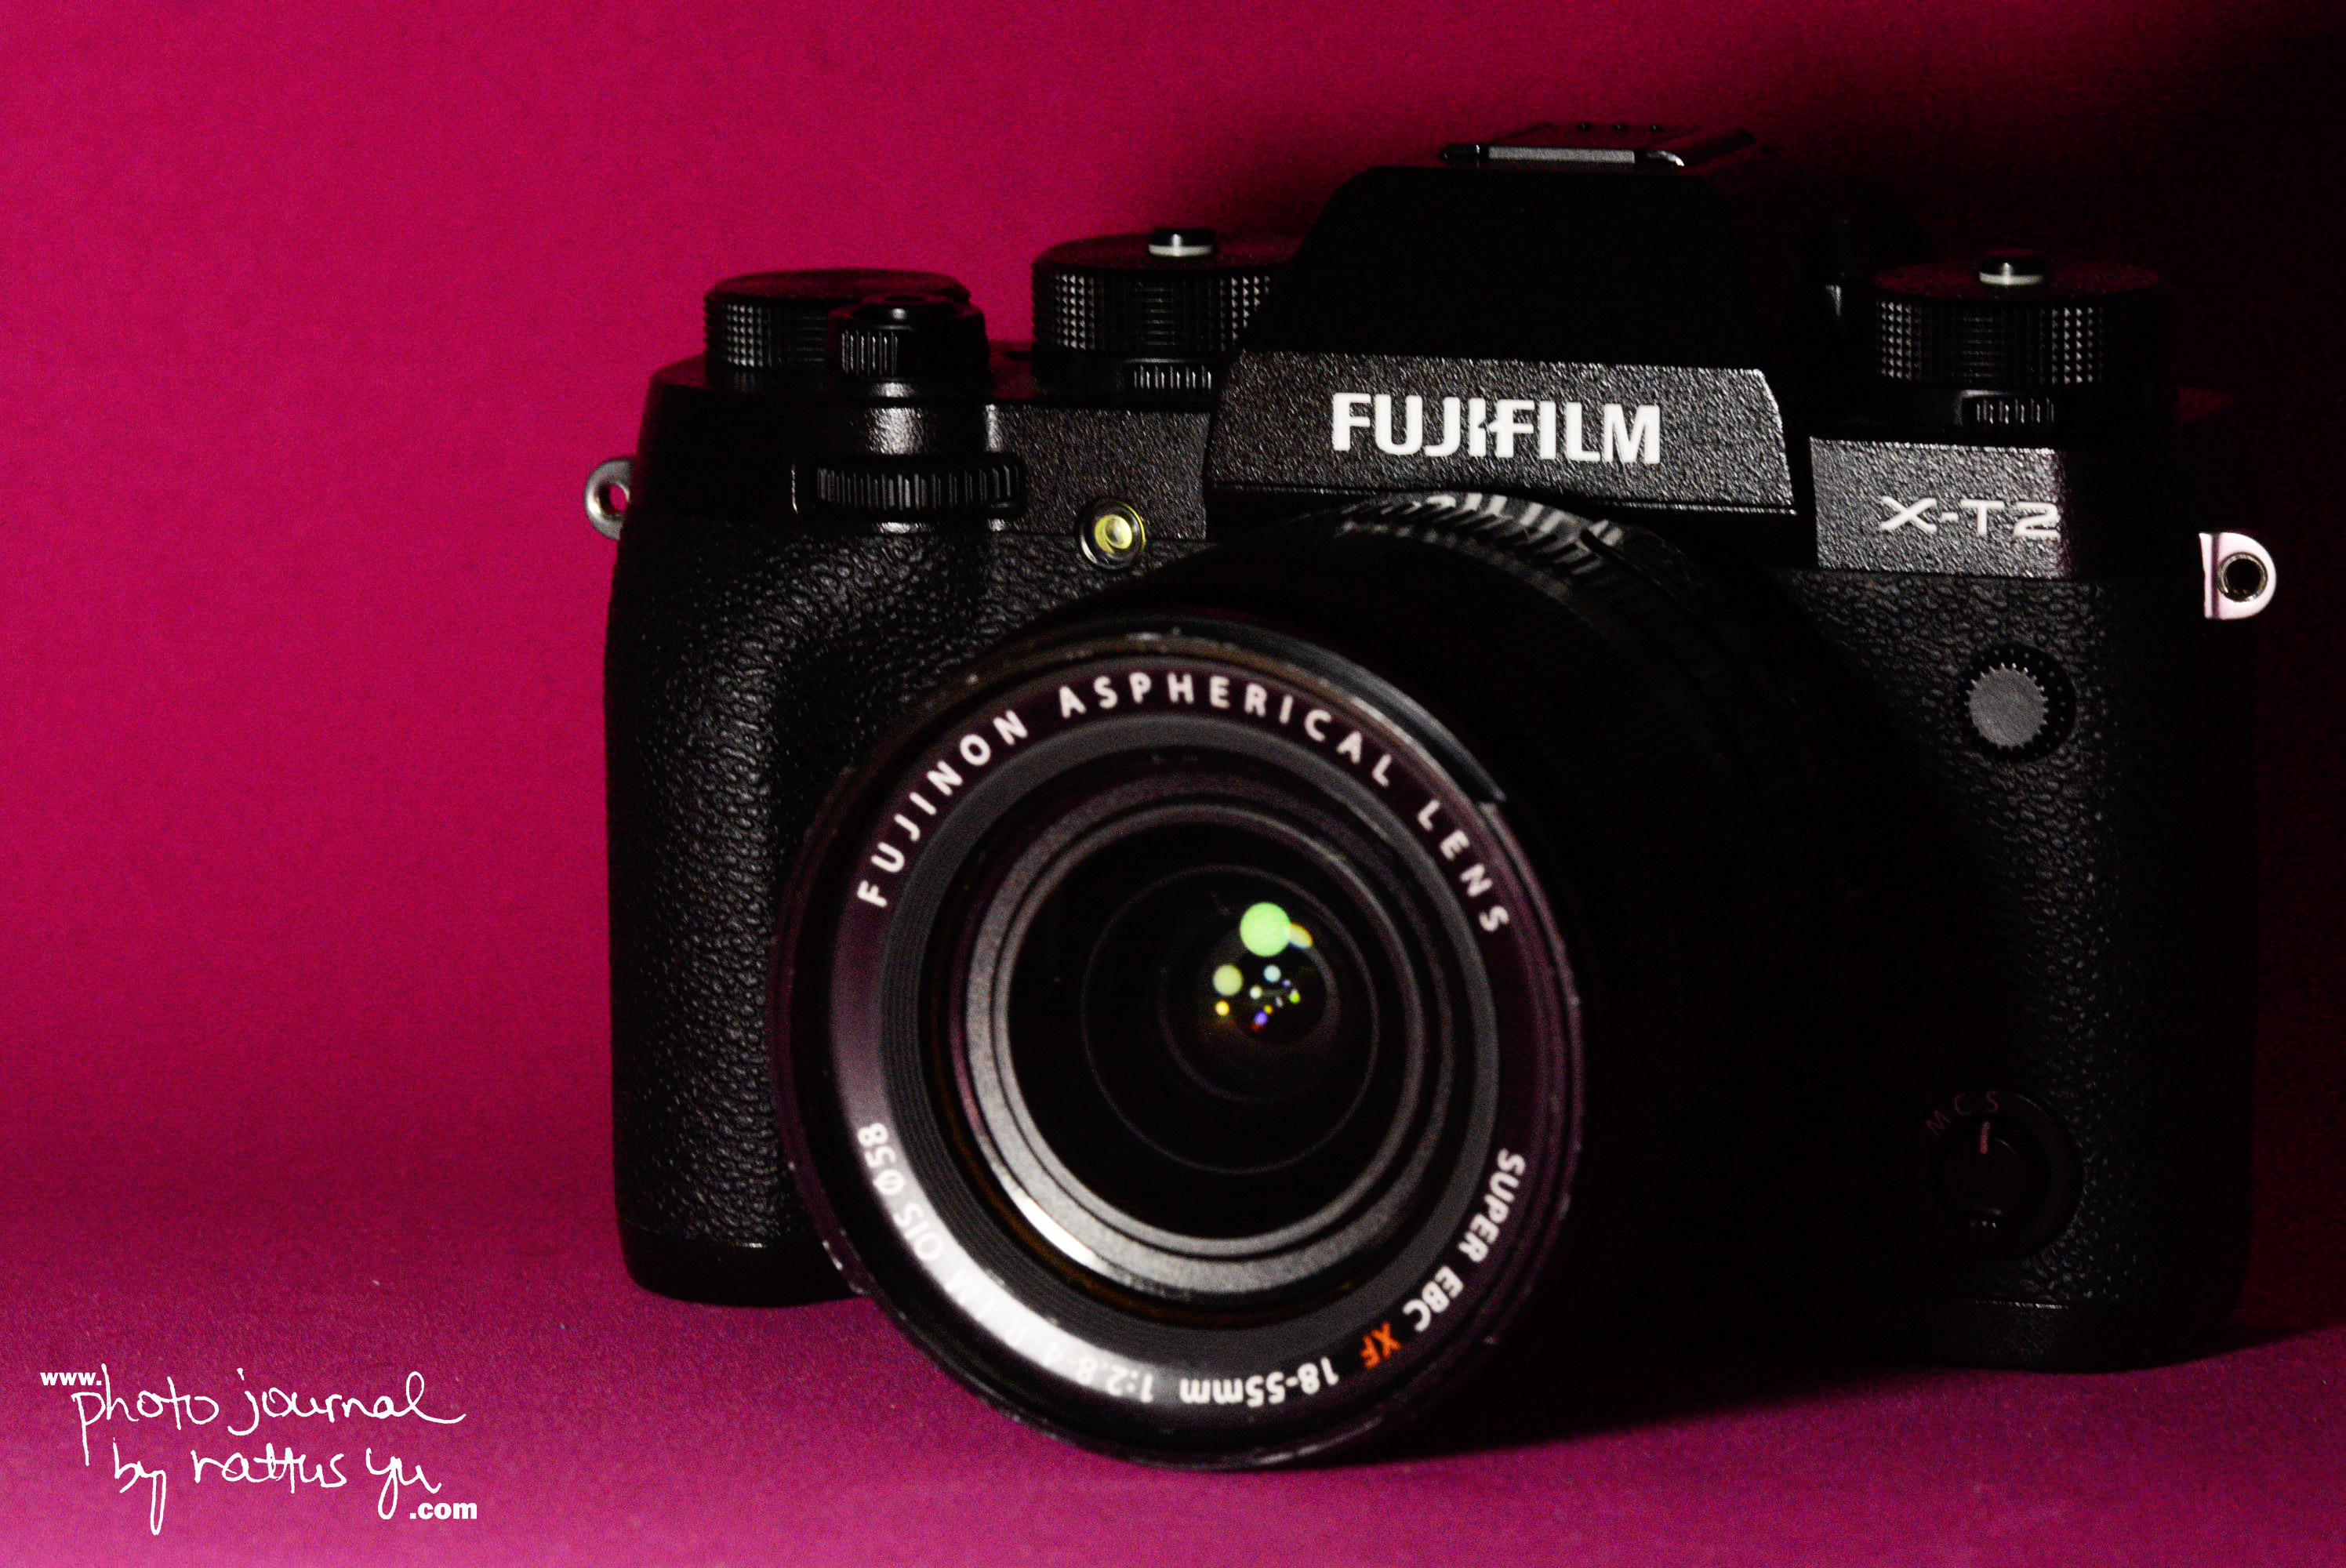 FUJIFILM X-T20, mirrorless camera from 2016